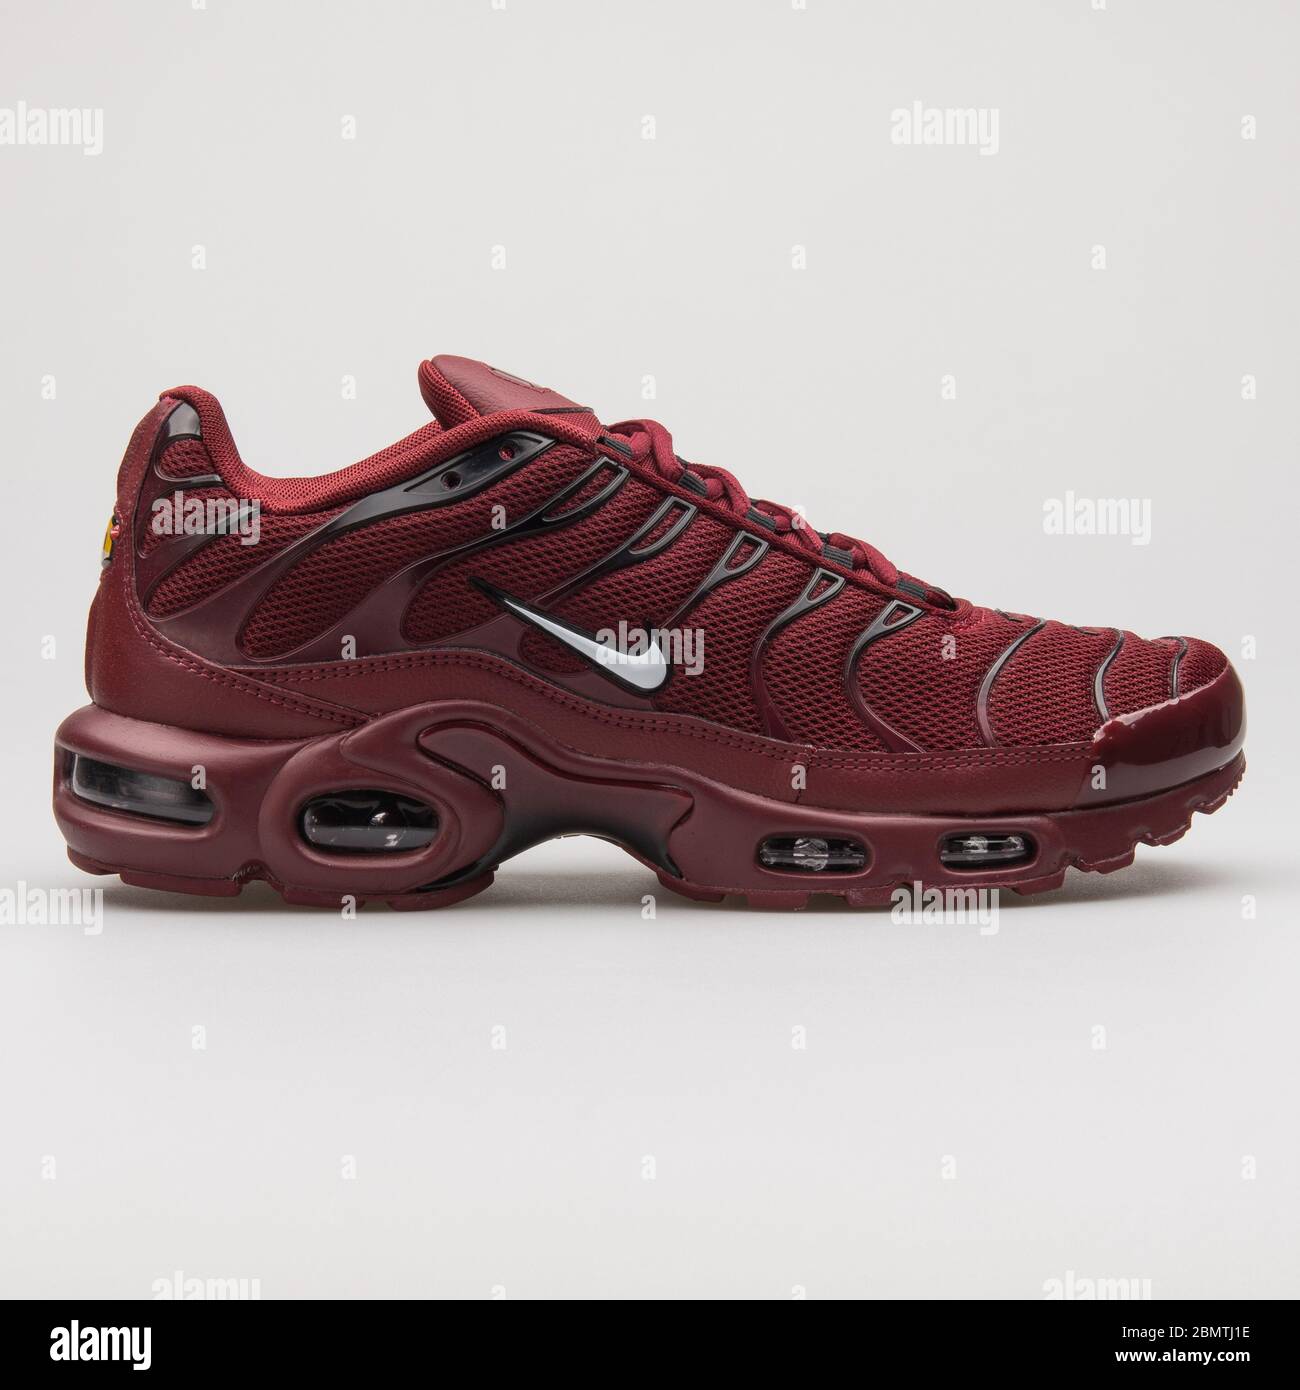 Nike plus fotografías e imágenes de alta resolución - Alamy